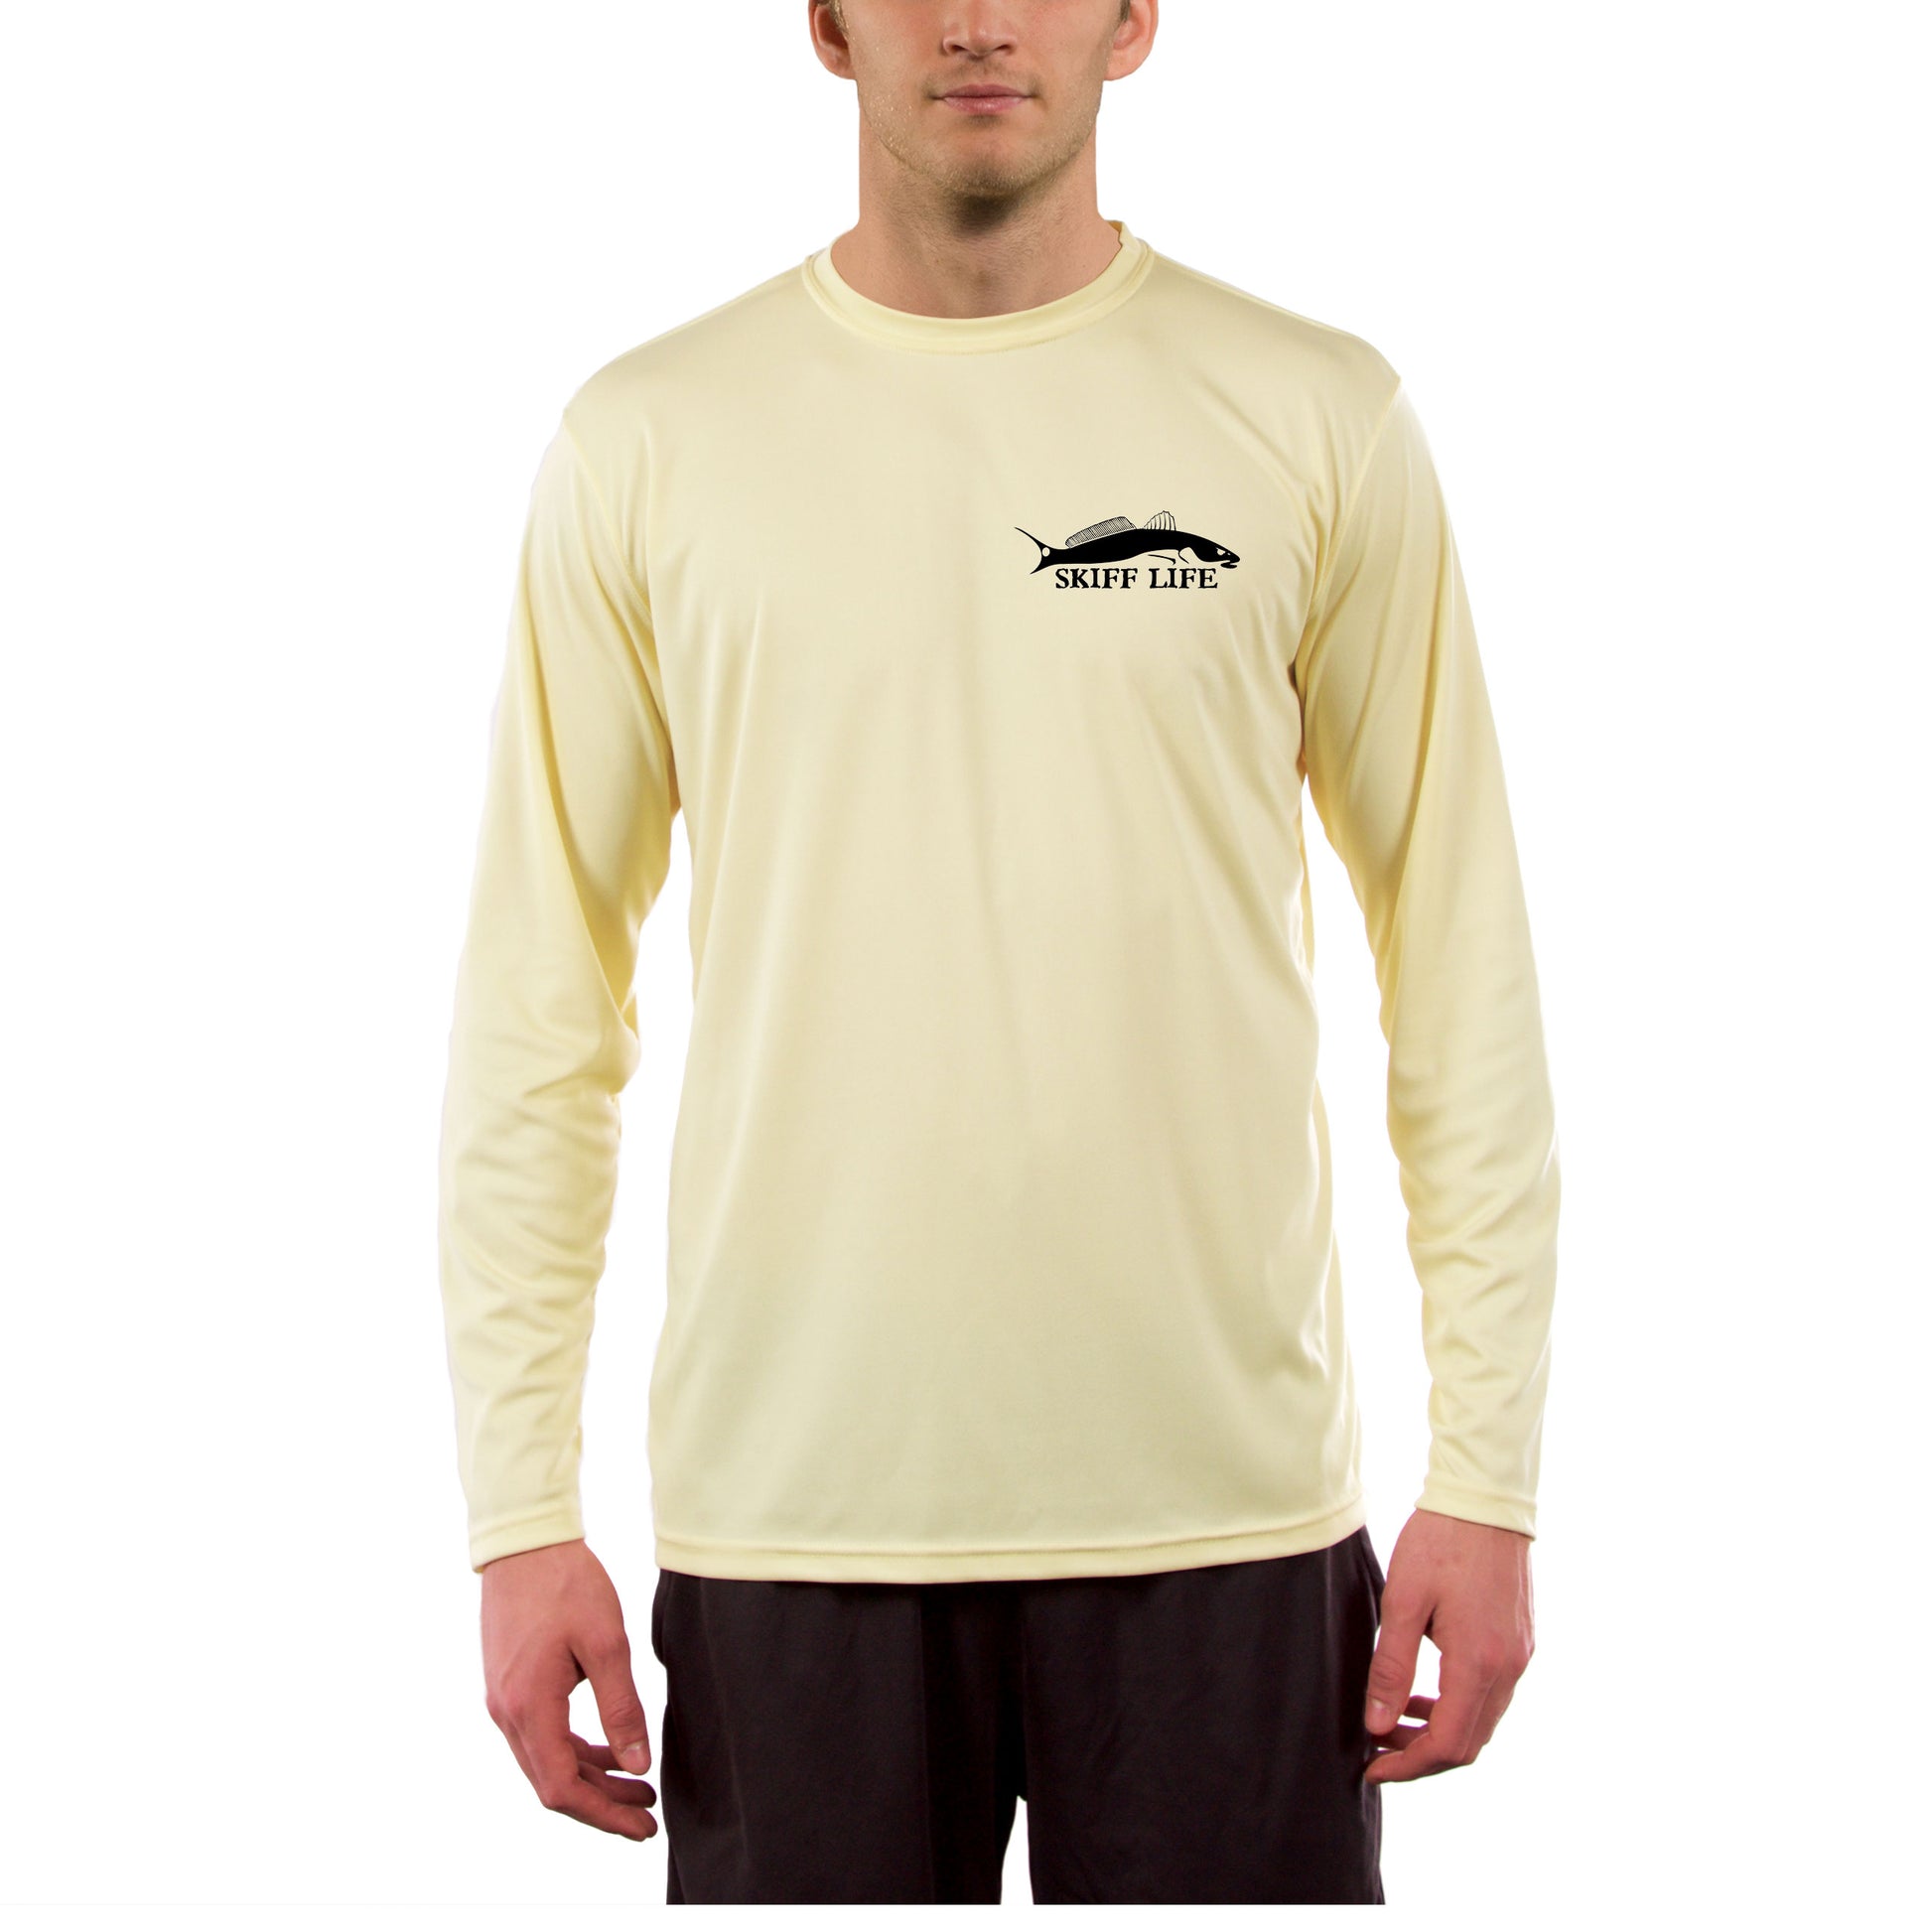 Reel Legends Mens Reel-Tec Shark Long Sleeve T-Shirt Small